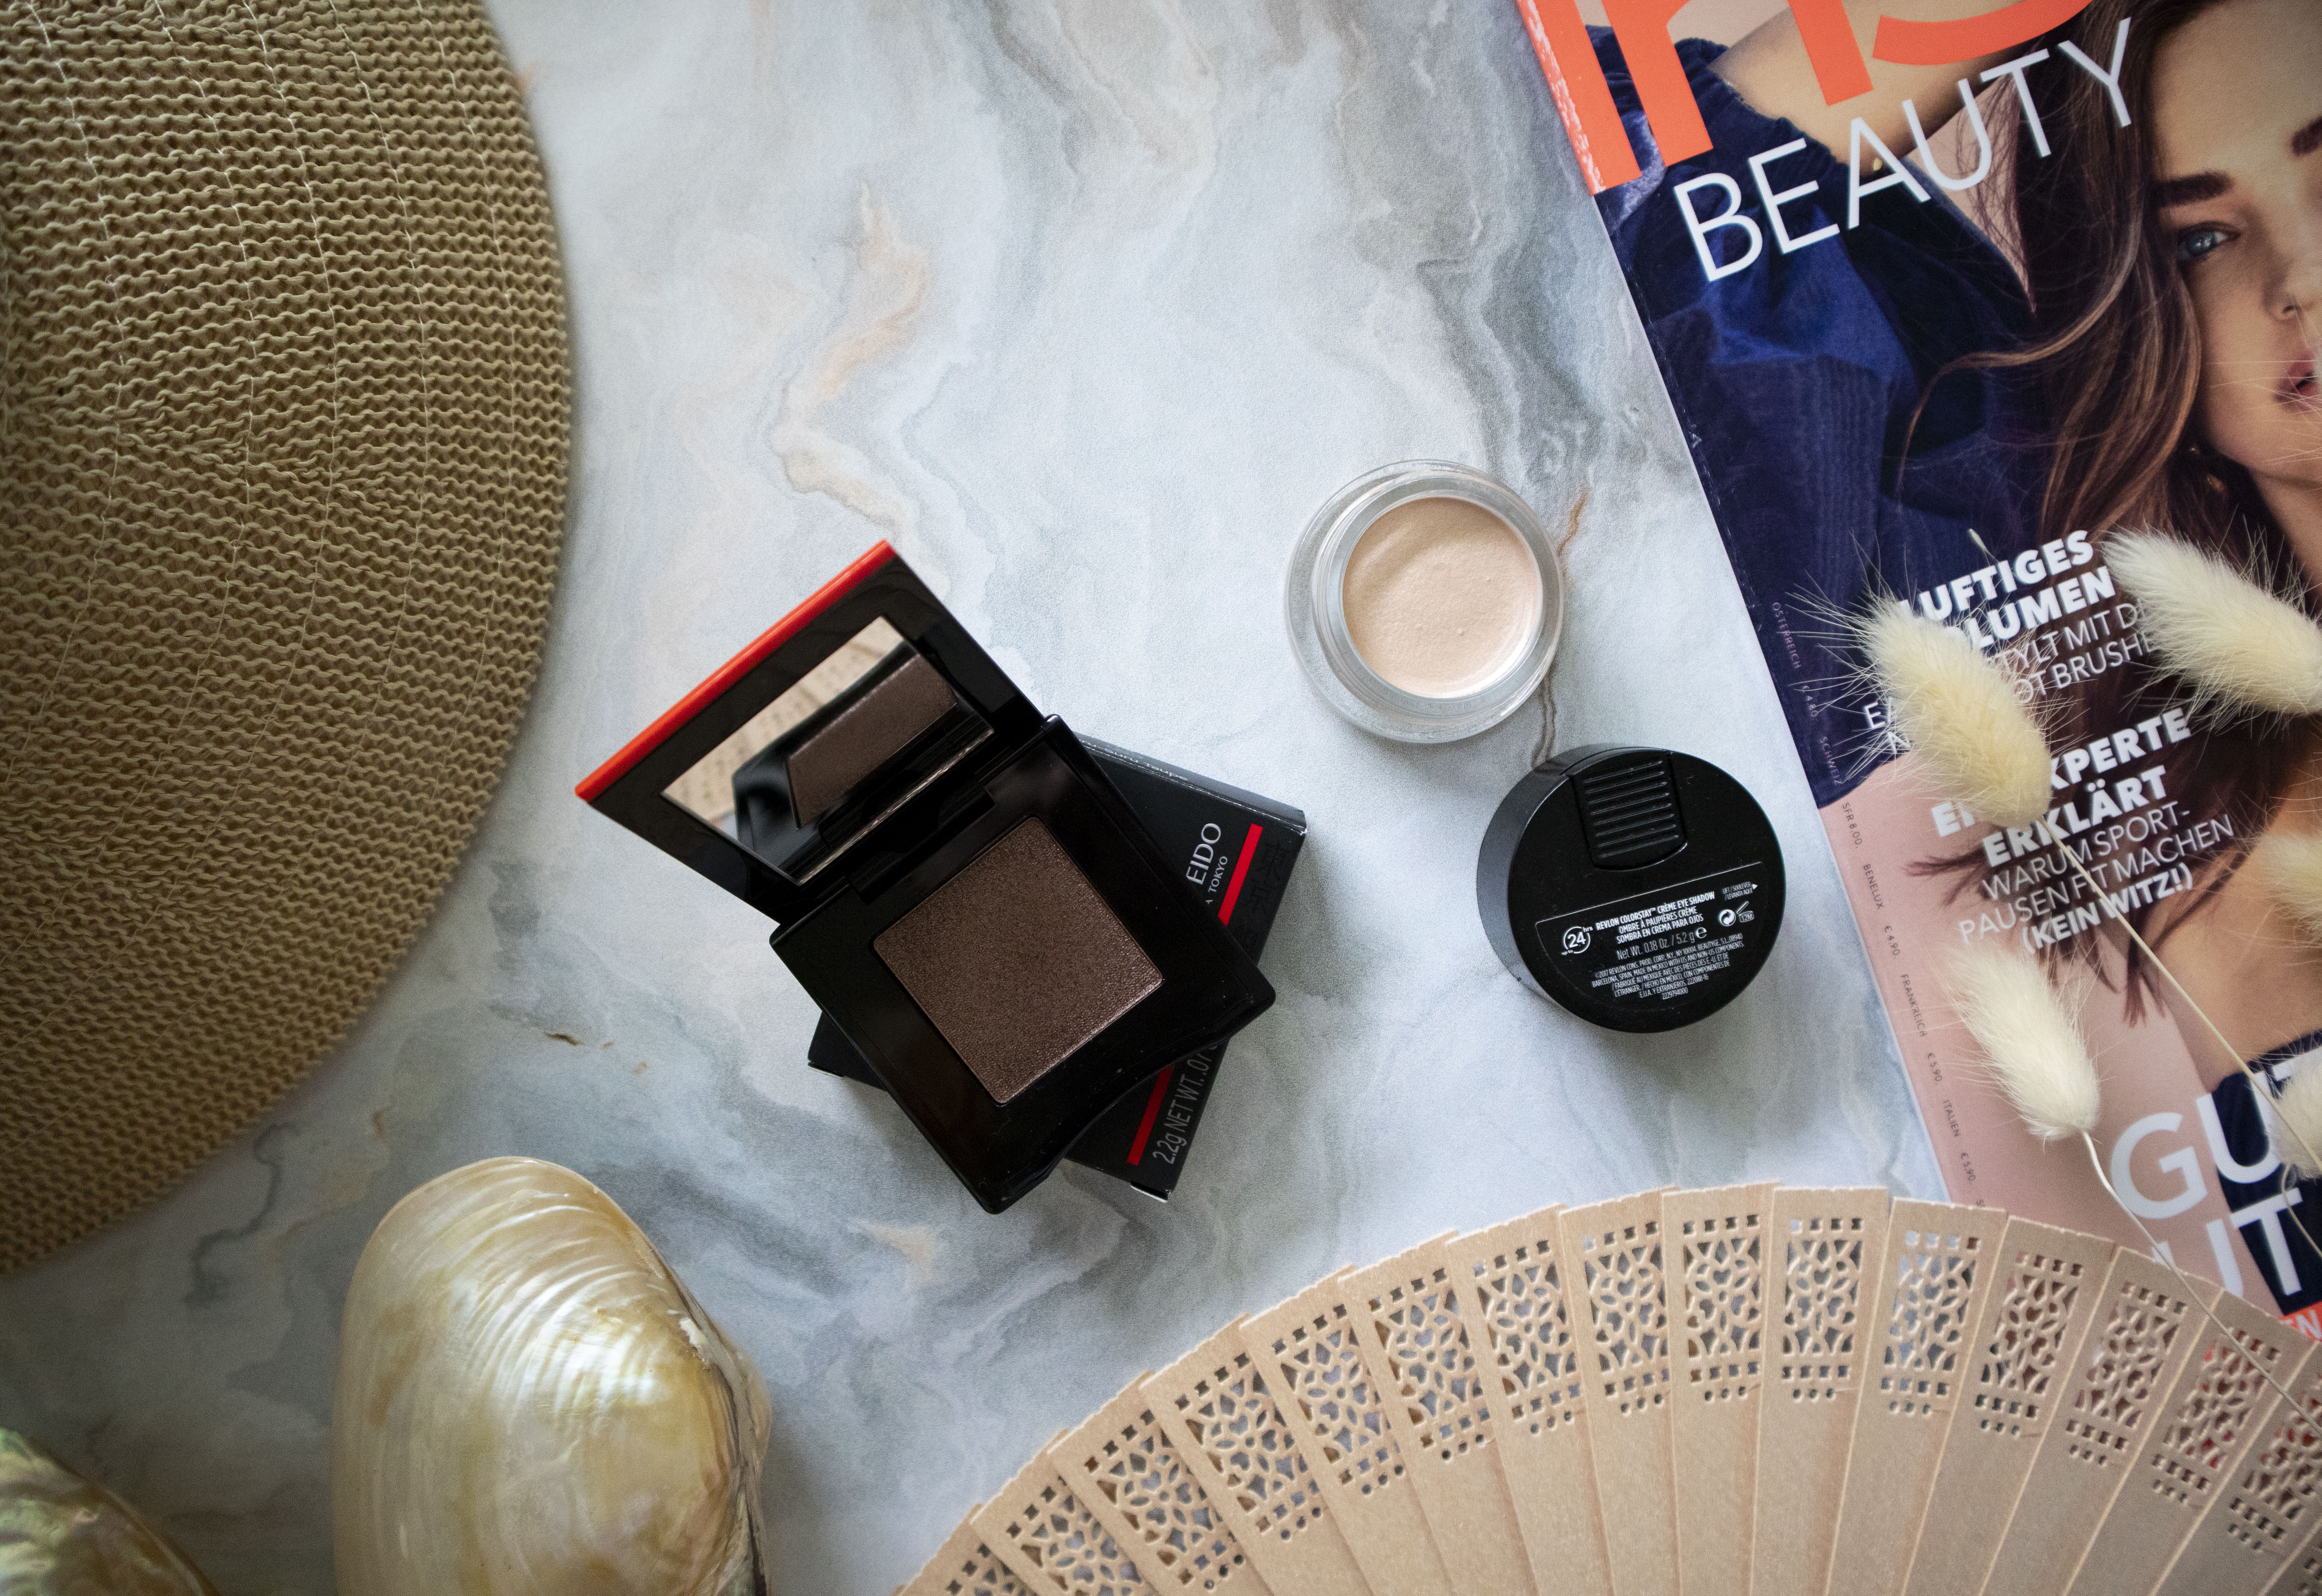 Wasserfestes-Make-Up-lidschatten-empfehlungen-shiseido-revlon